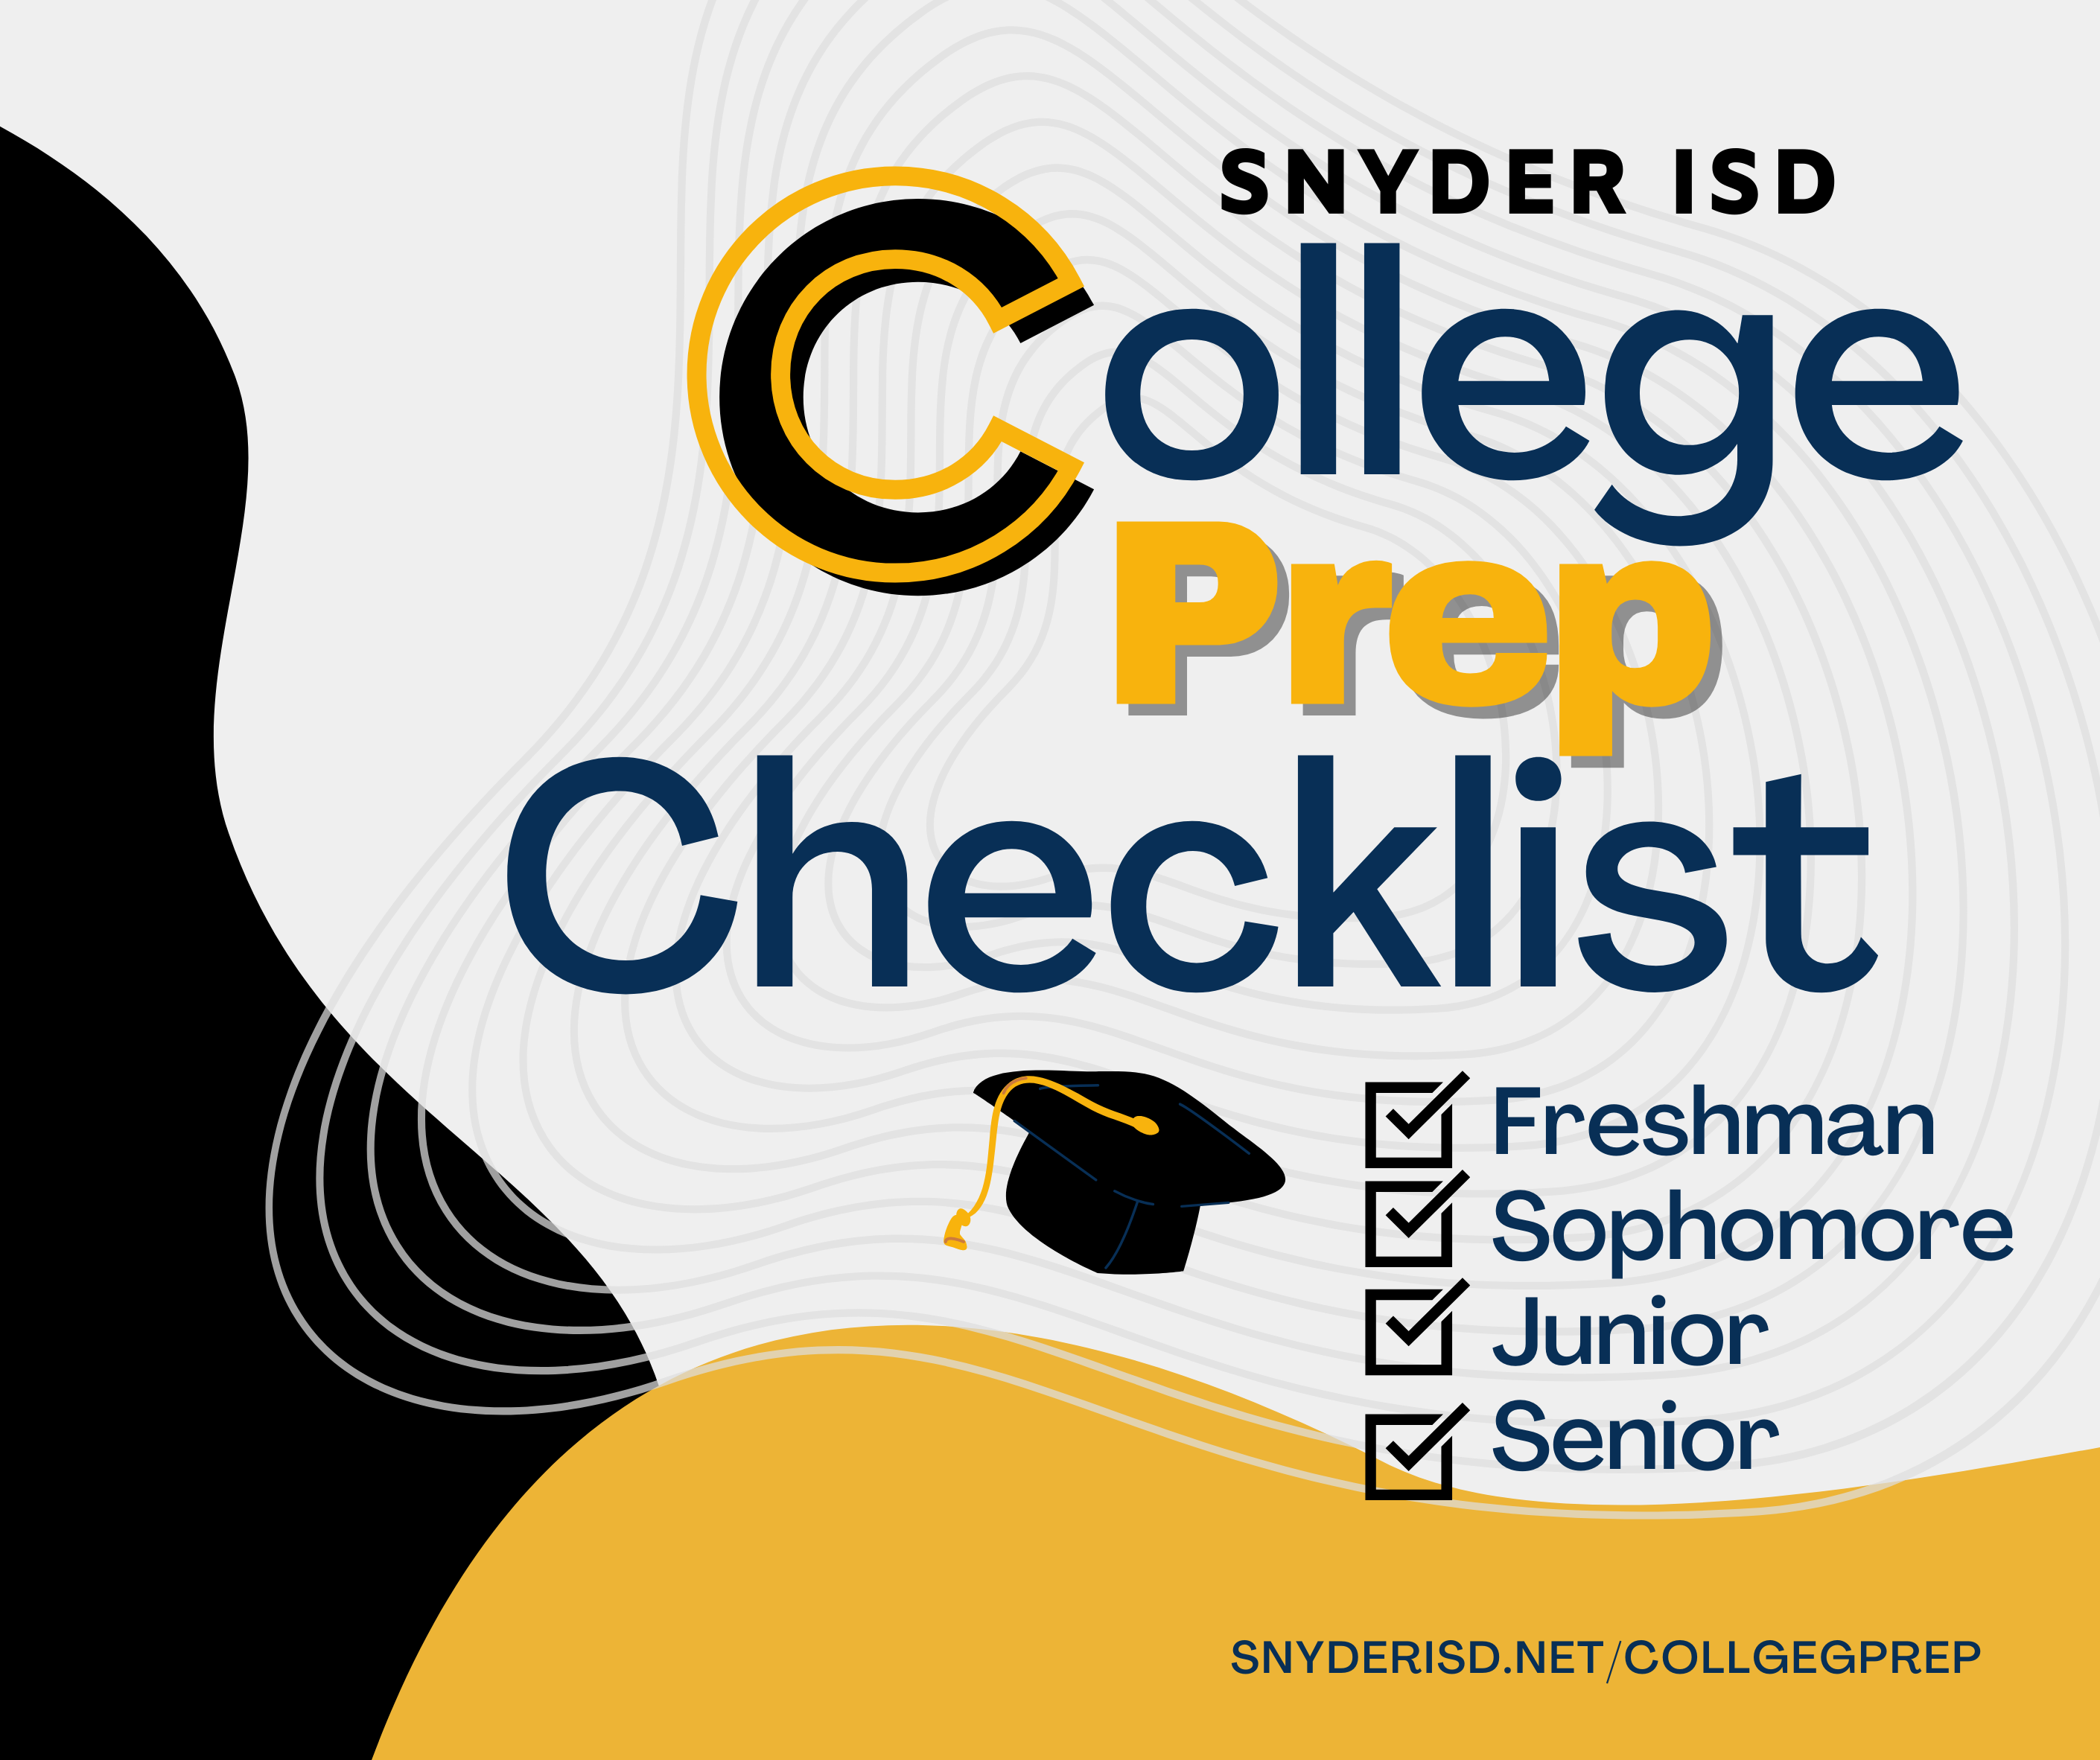 College prep checklist graphic - checkboxes next to freshman, sophomore, junior, and senior